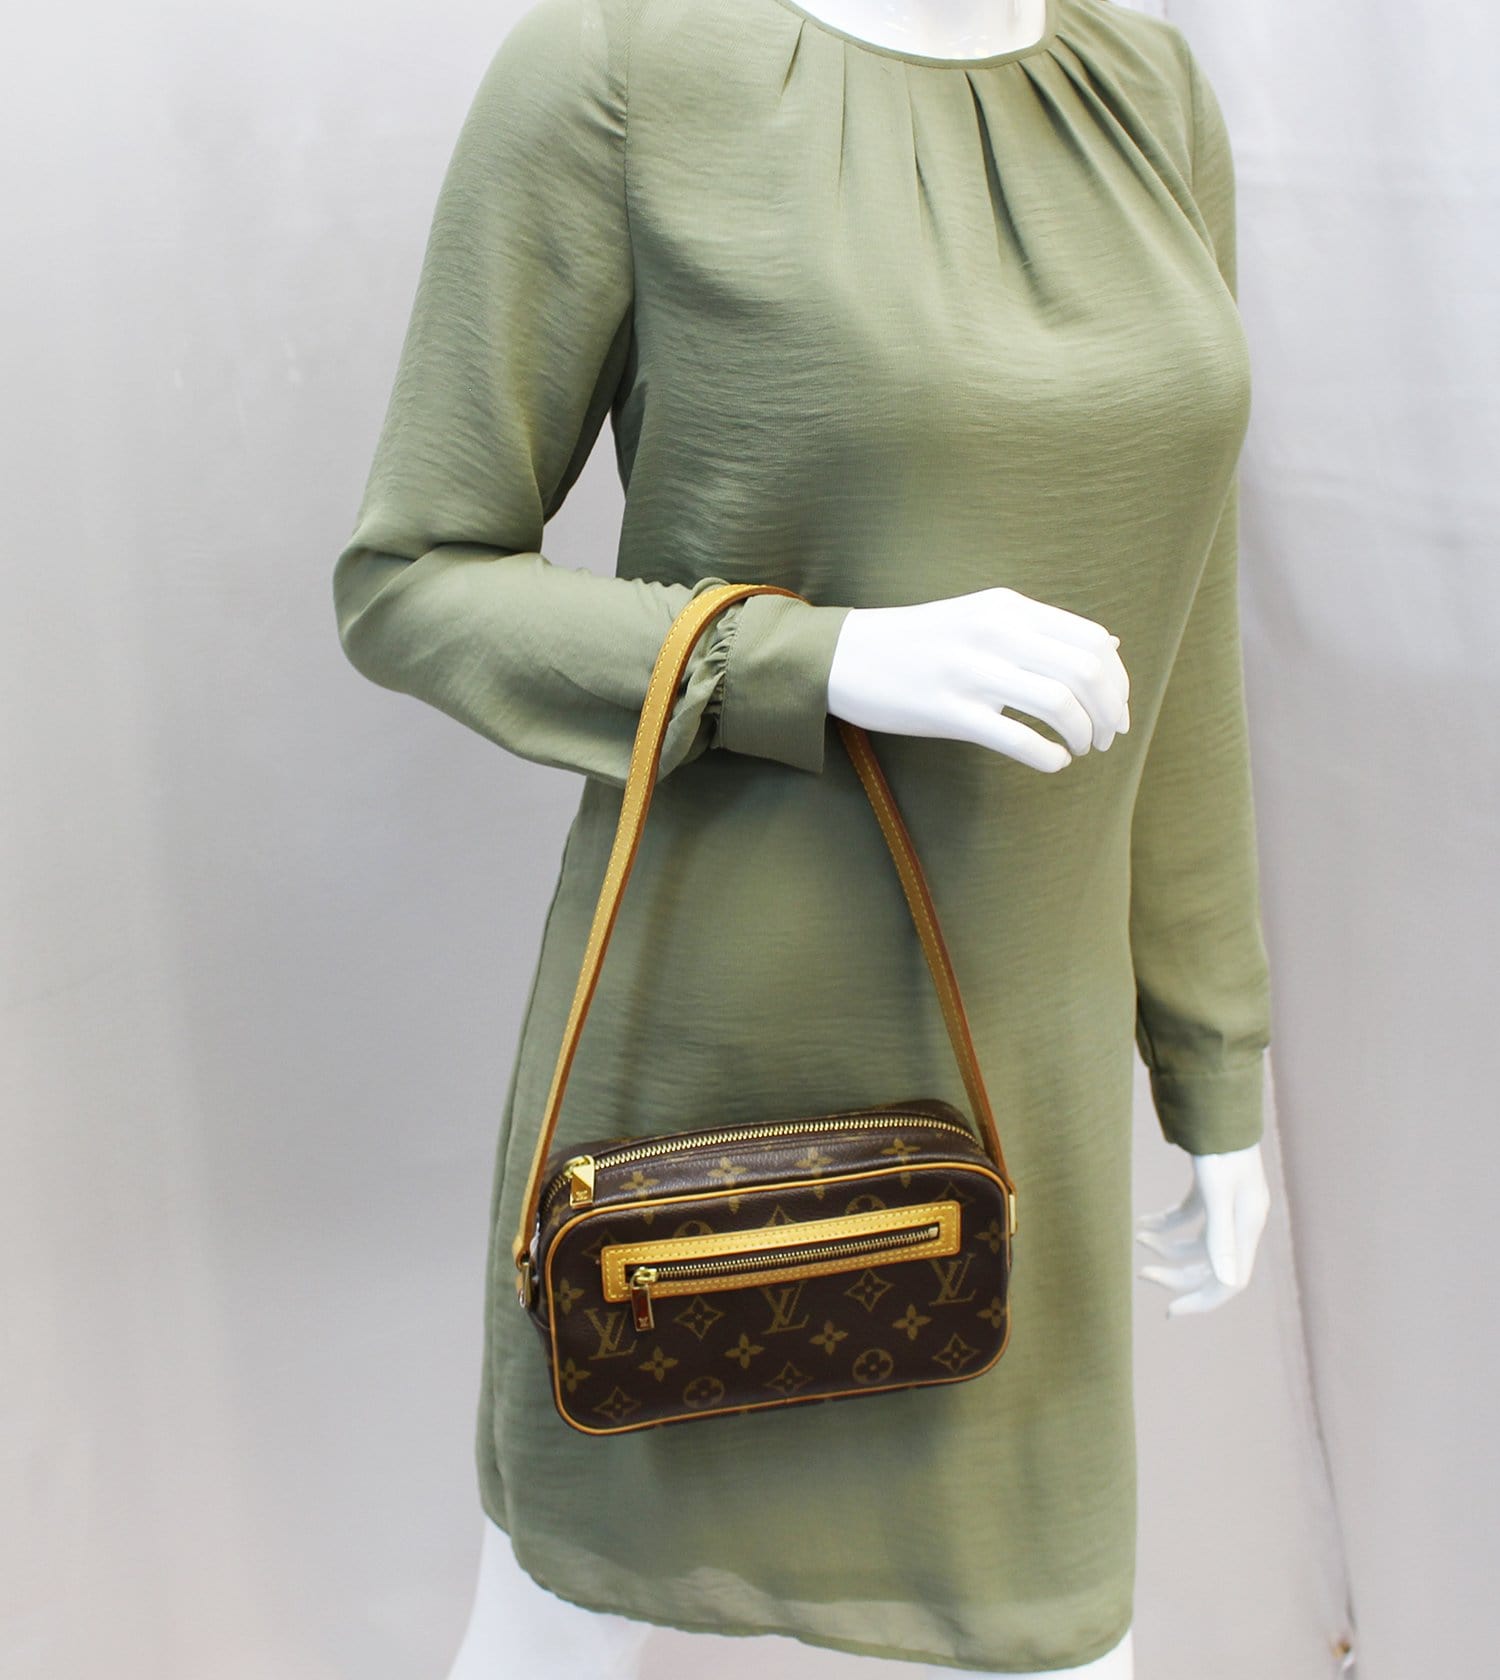 Louis Vuitton 2002 Cite Shoulder Bag in Brown